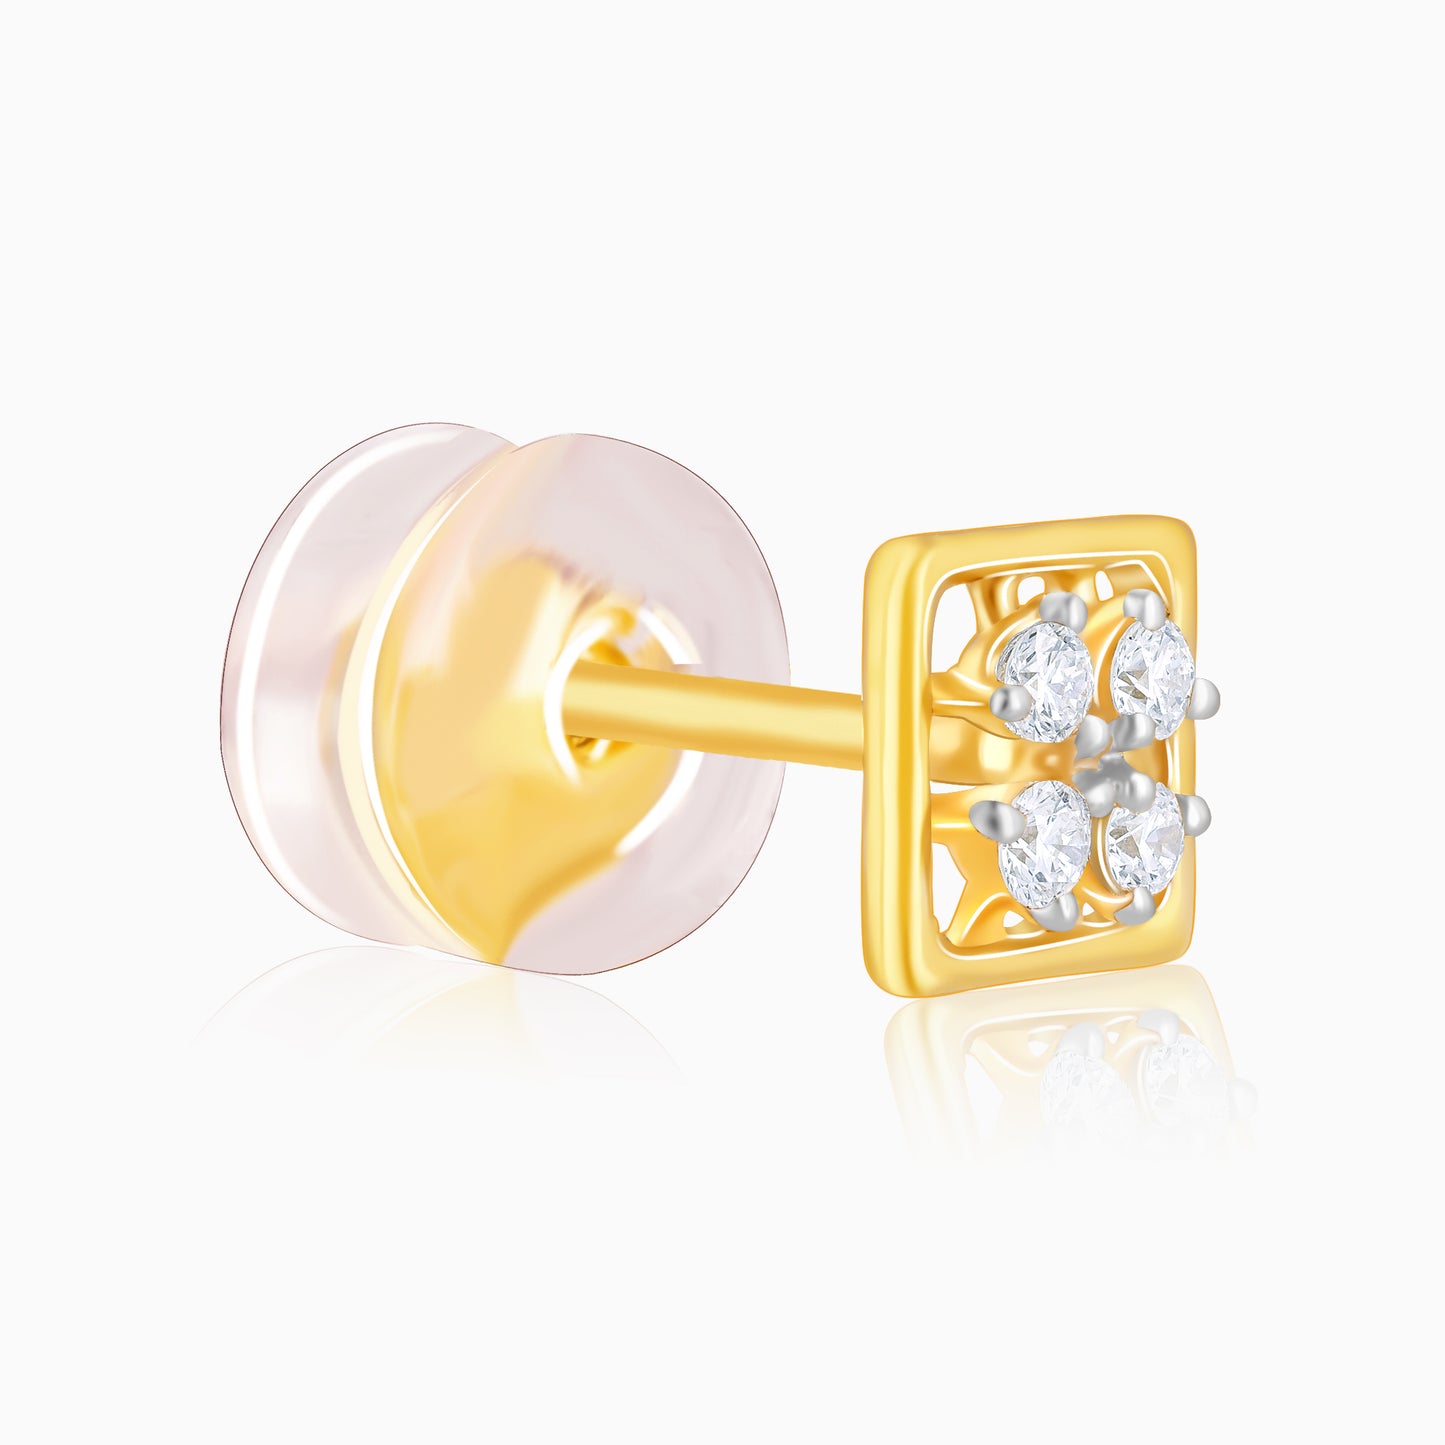 Gold Square Cut Diamond Stud Earrings